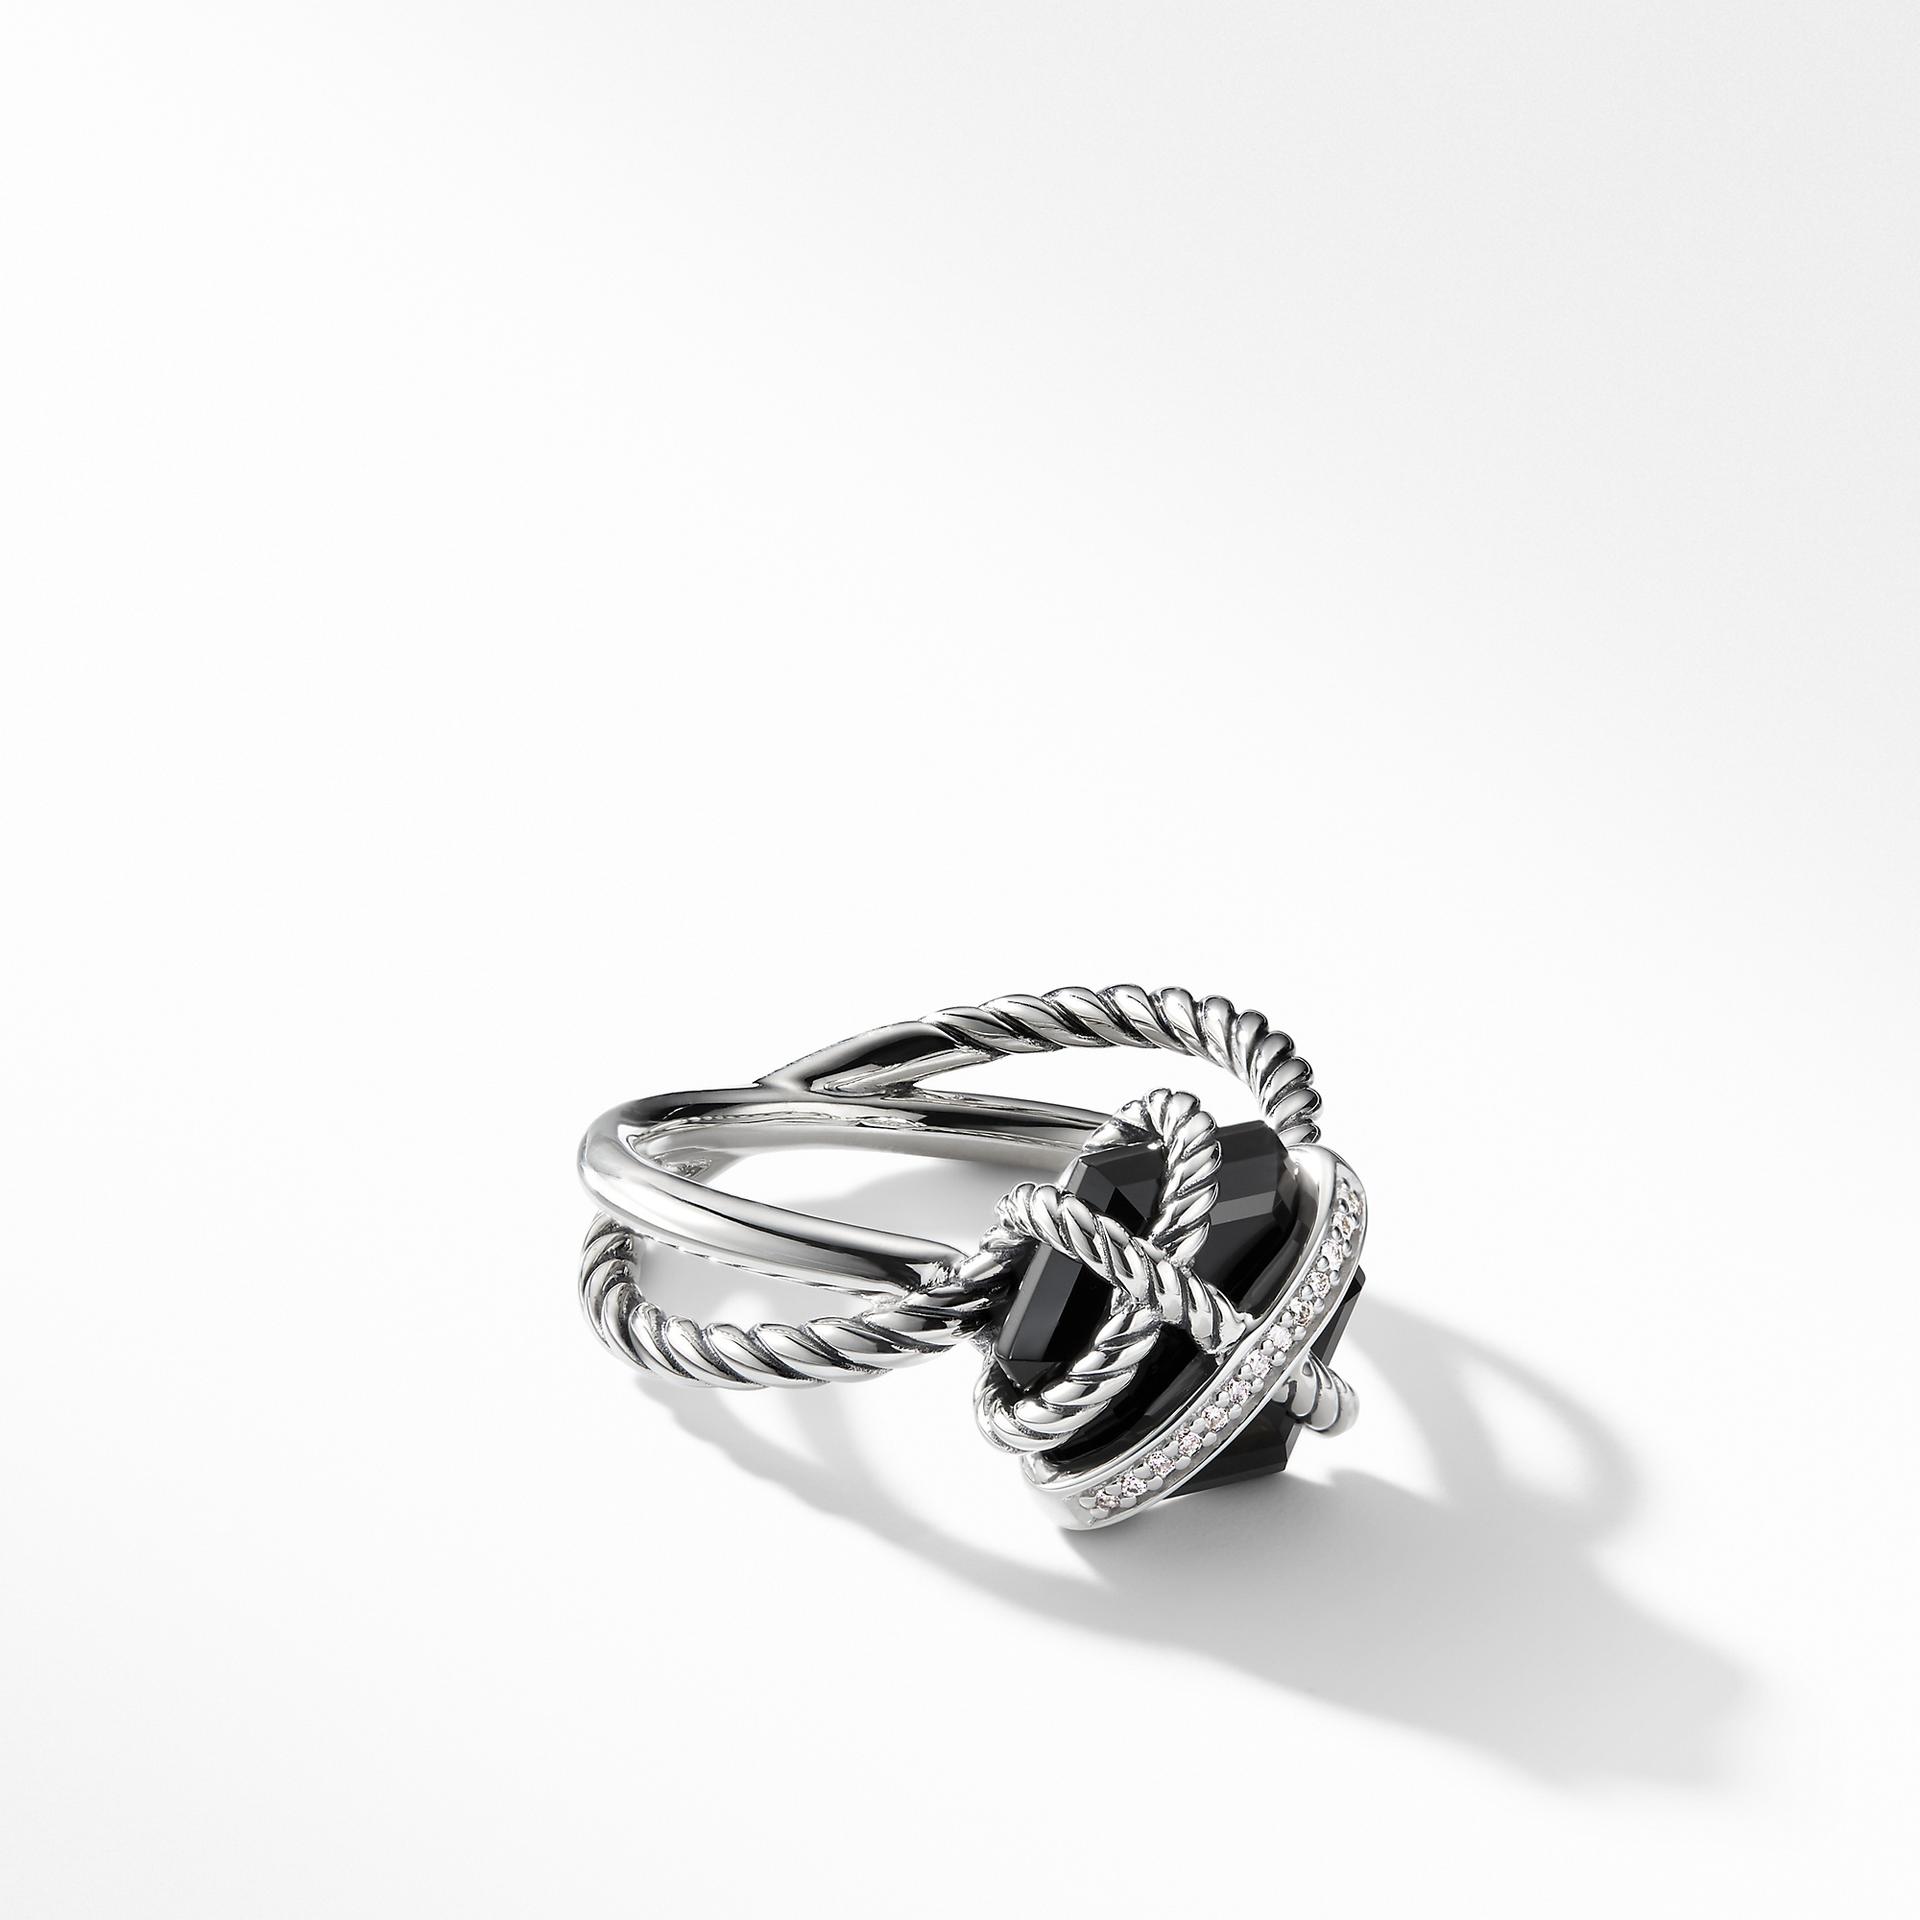 David Yurman Ring with Black Onyx and Diamonds, size 6 0